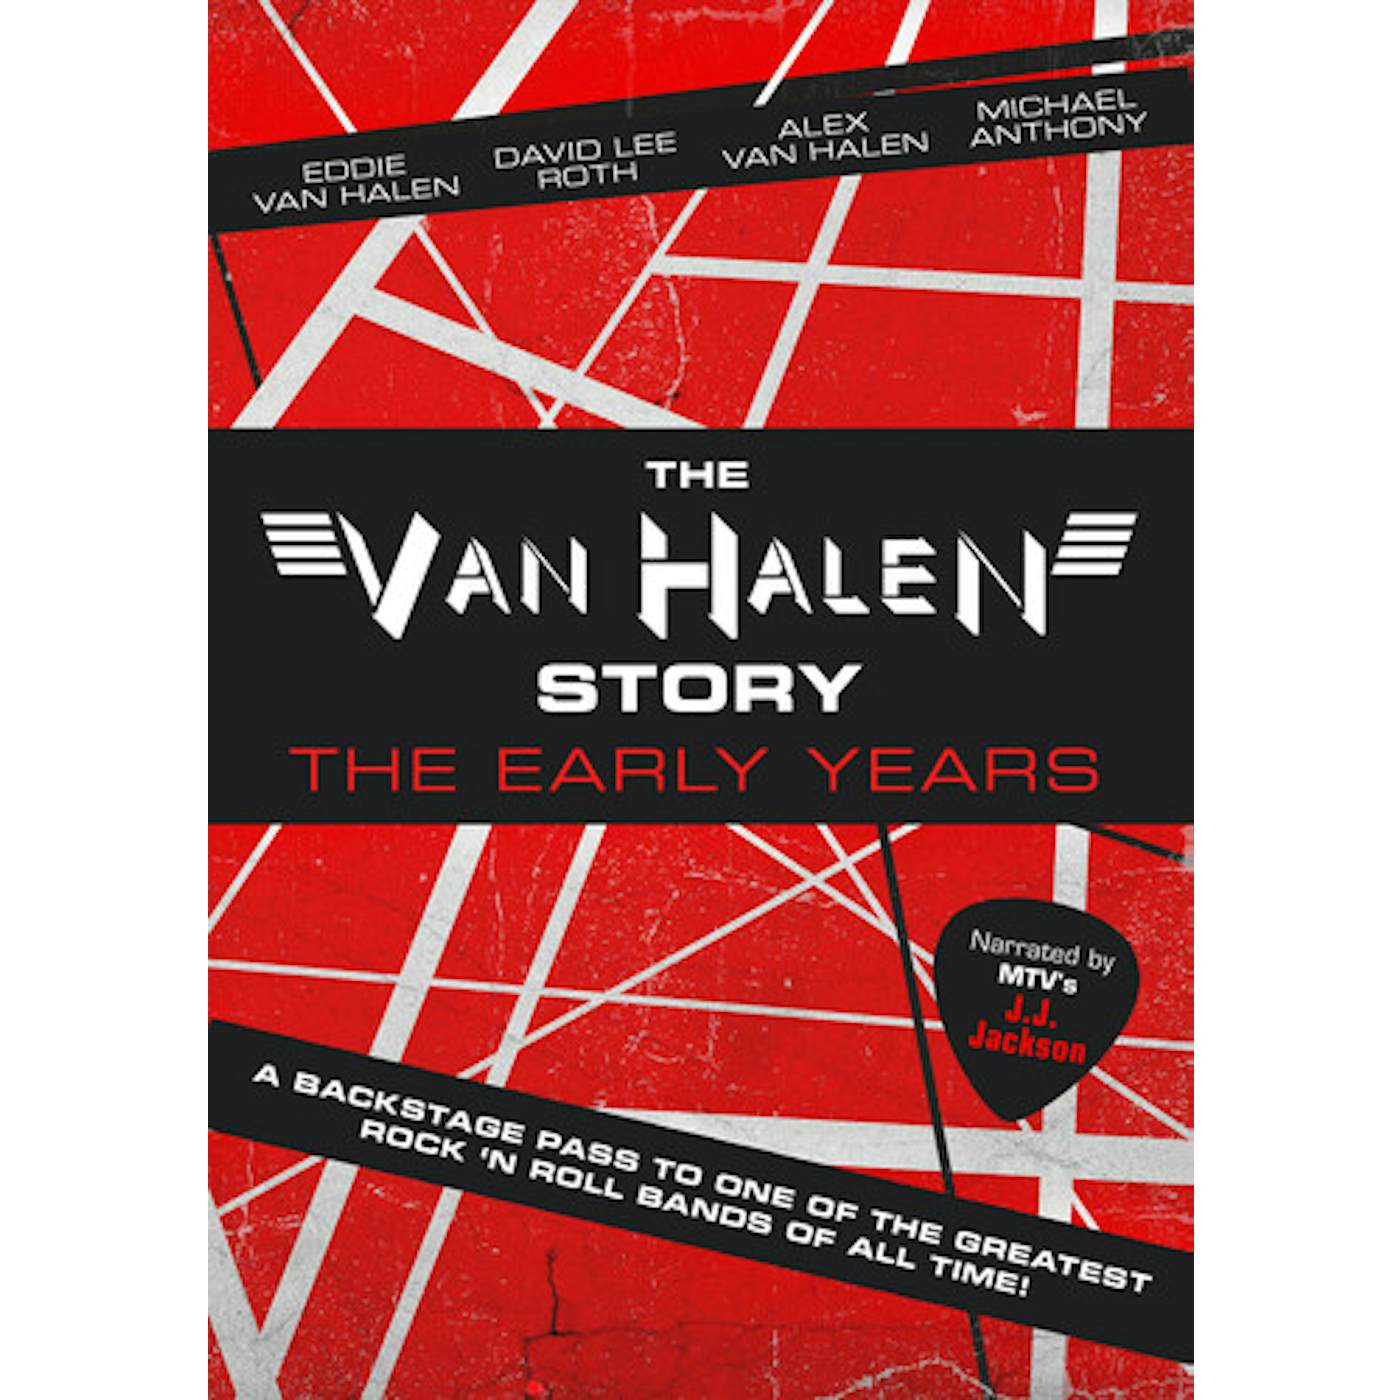 VAN HALEN STORY: THE EARLY YEARS DVD